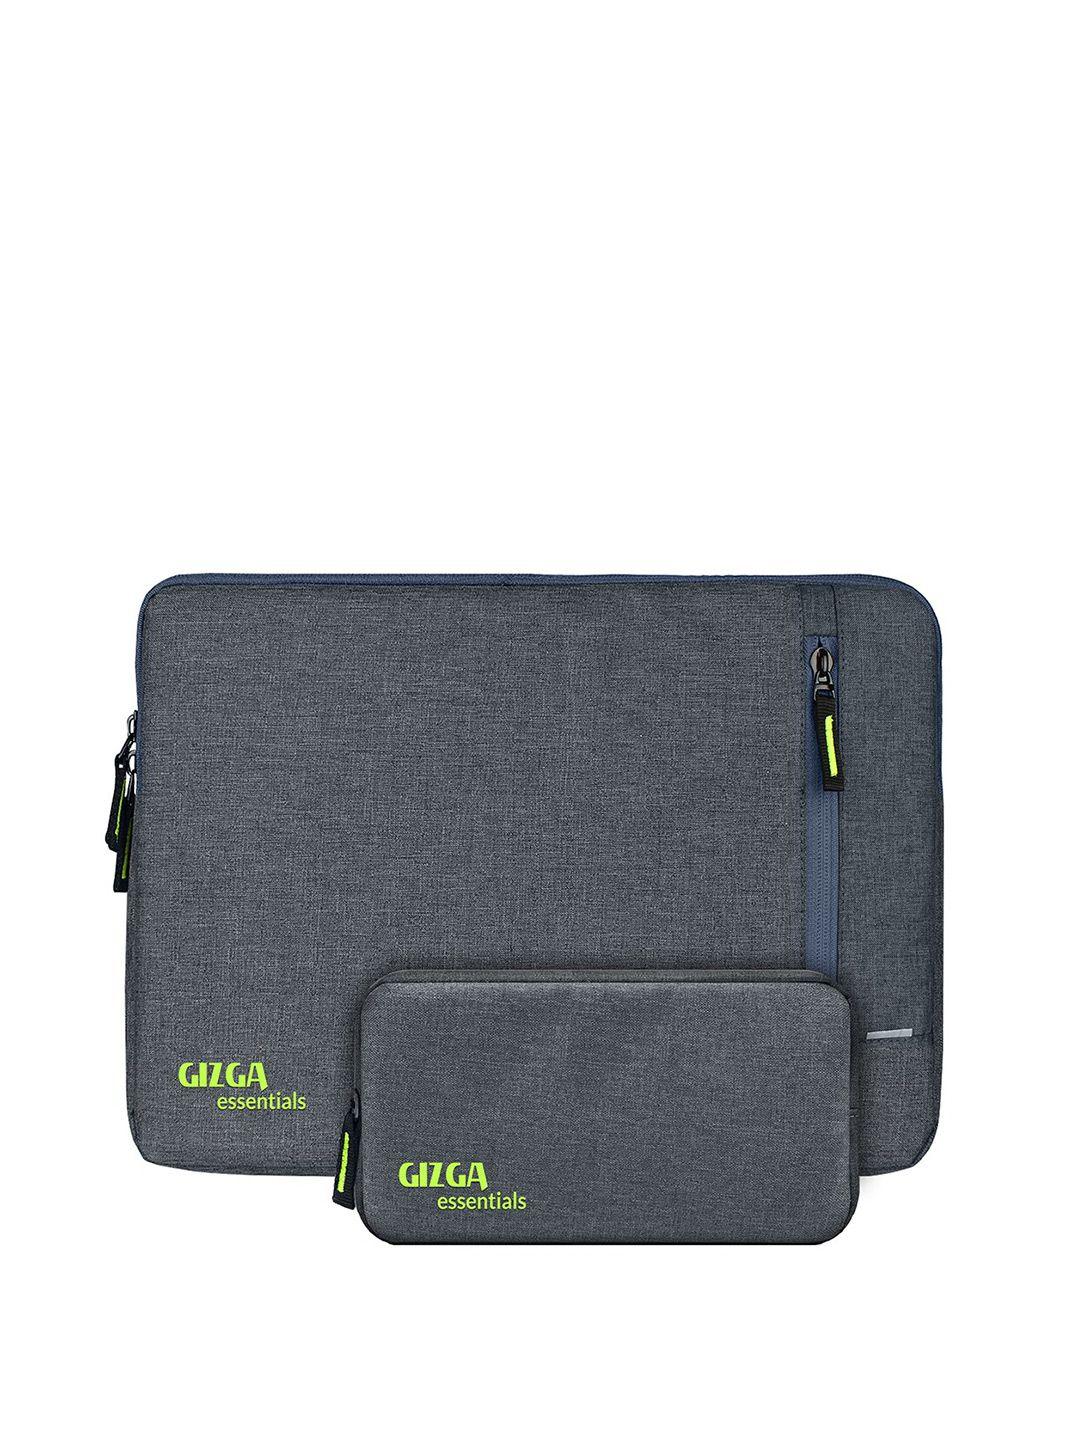 gizga essentials unisex grey textured 15.6 inch laptop sleeve with pouch